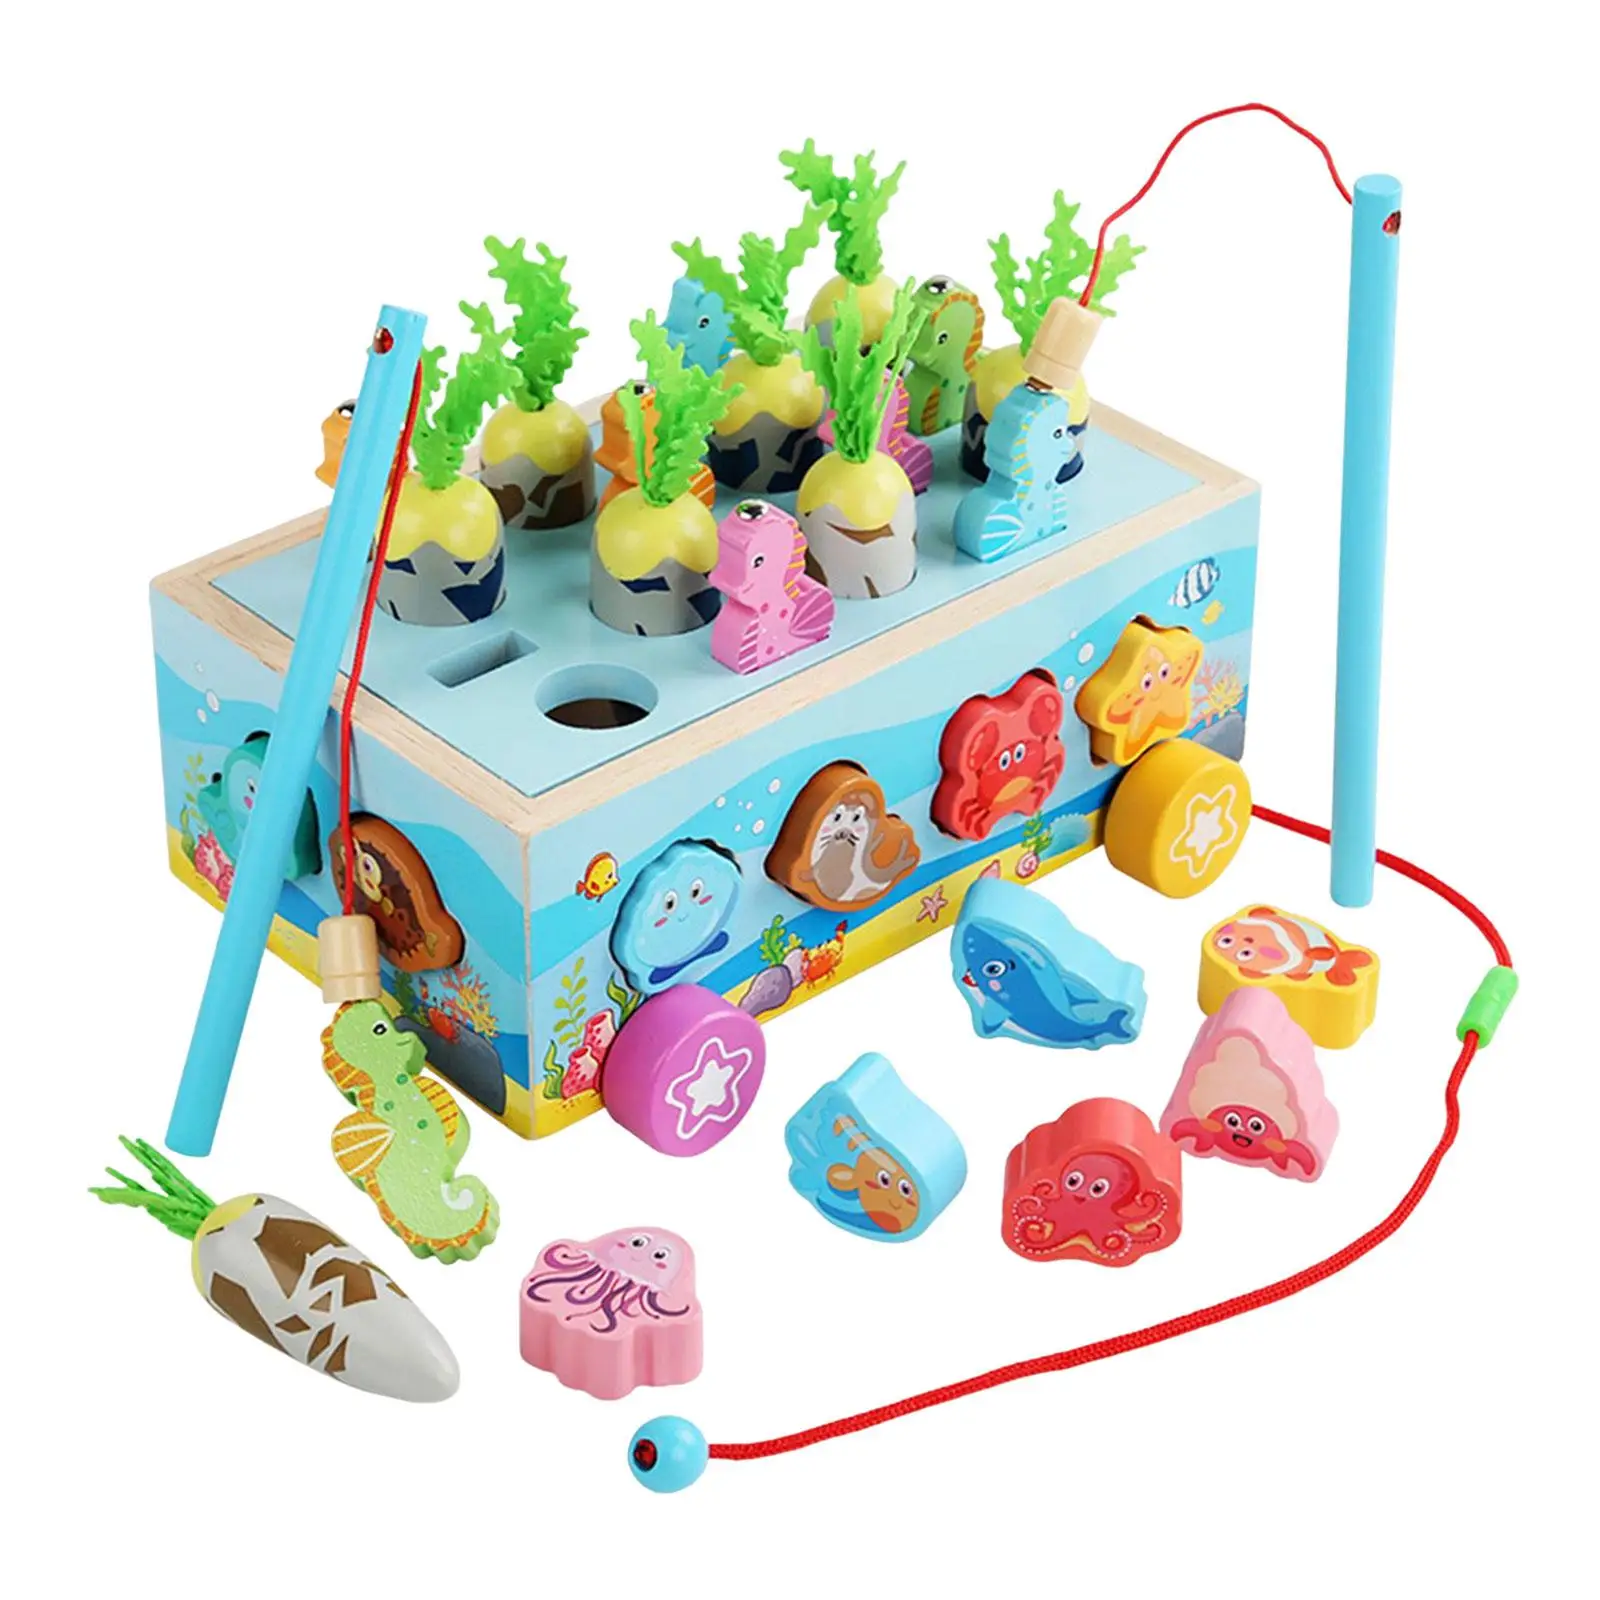 Montessori Wooden Shape Sorter Toys Fine Motor Skills Fishing Game Car with Animal Blocks for Toddler Girls Boys Birthday Gift